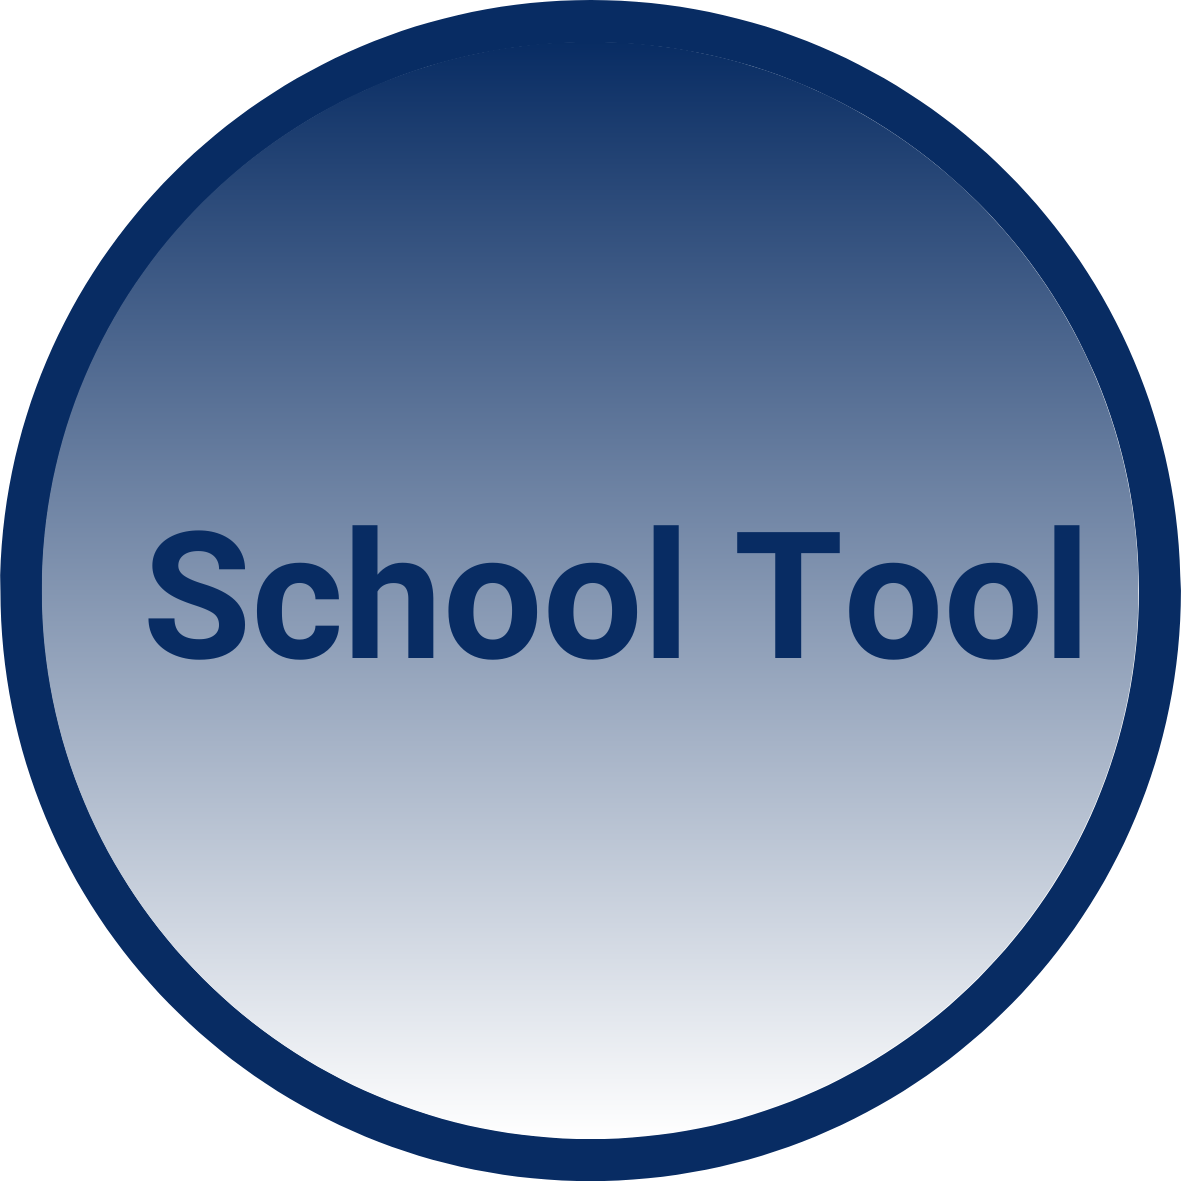 School Tool